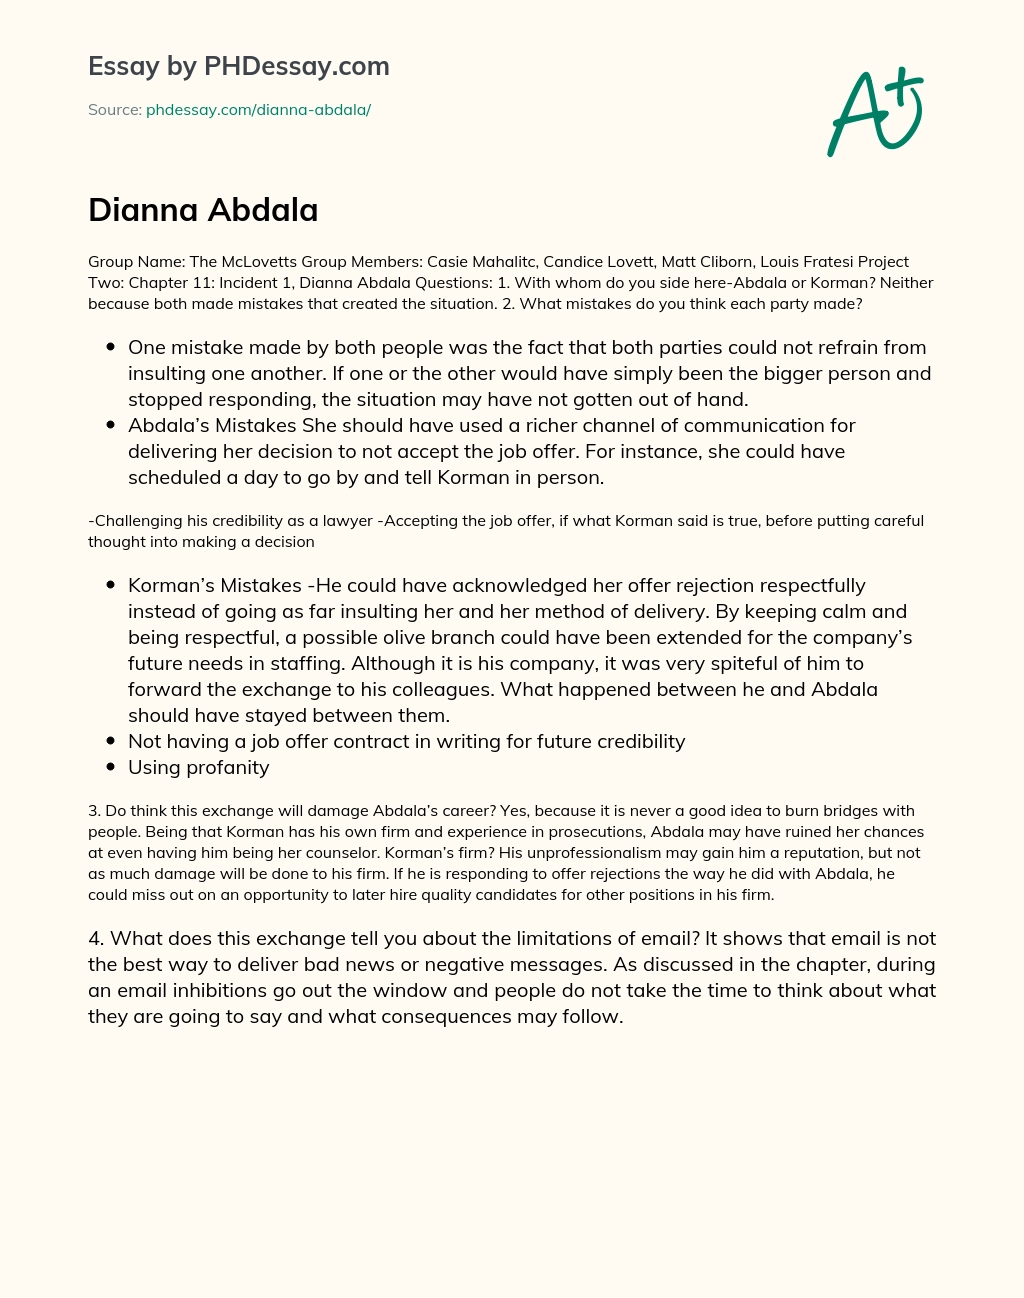 Dianna Abdala essay